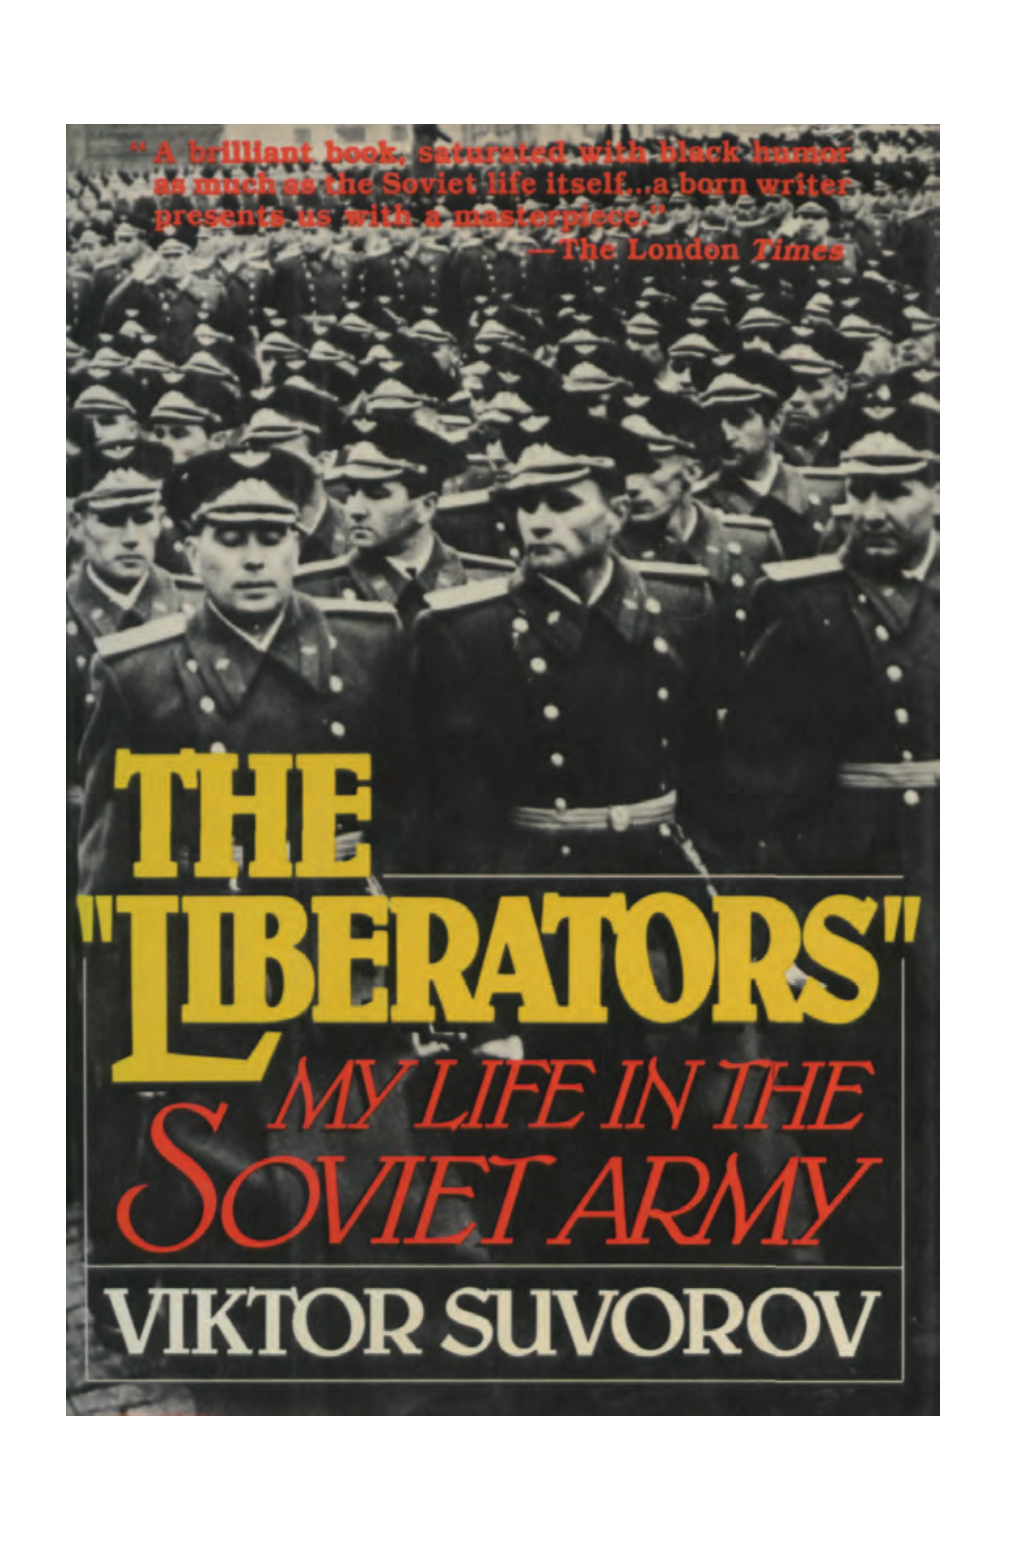 The ''Liberators''